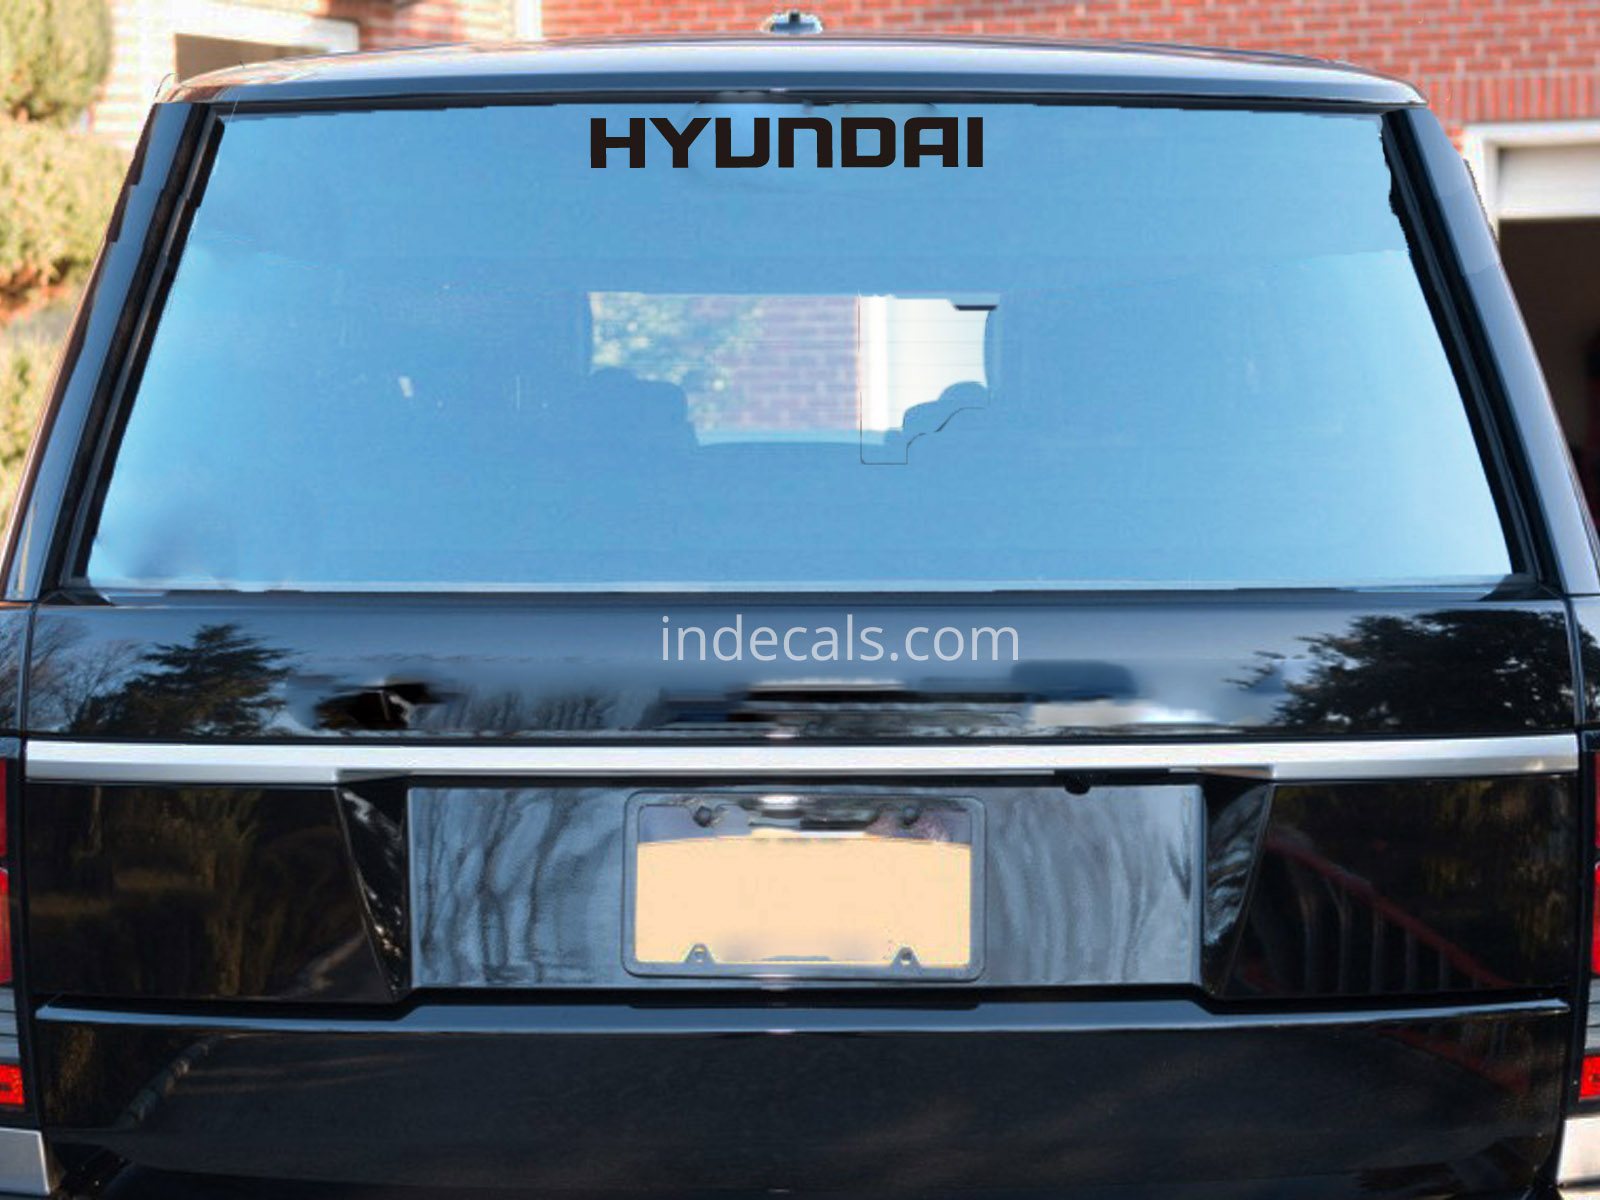 1 x Hyundai Sticker for Windshield or Back Window - Black